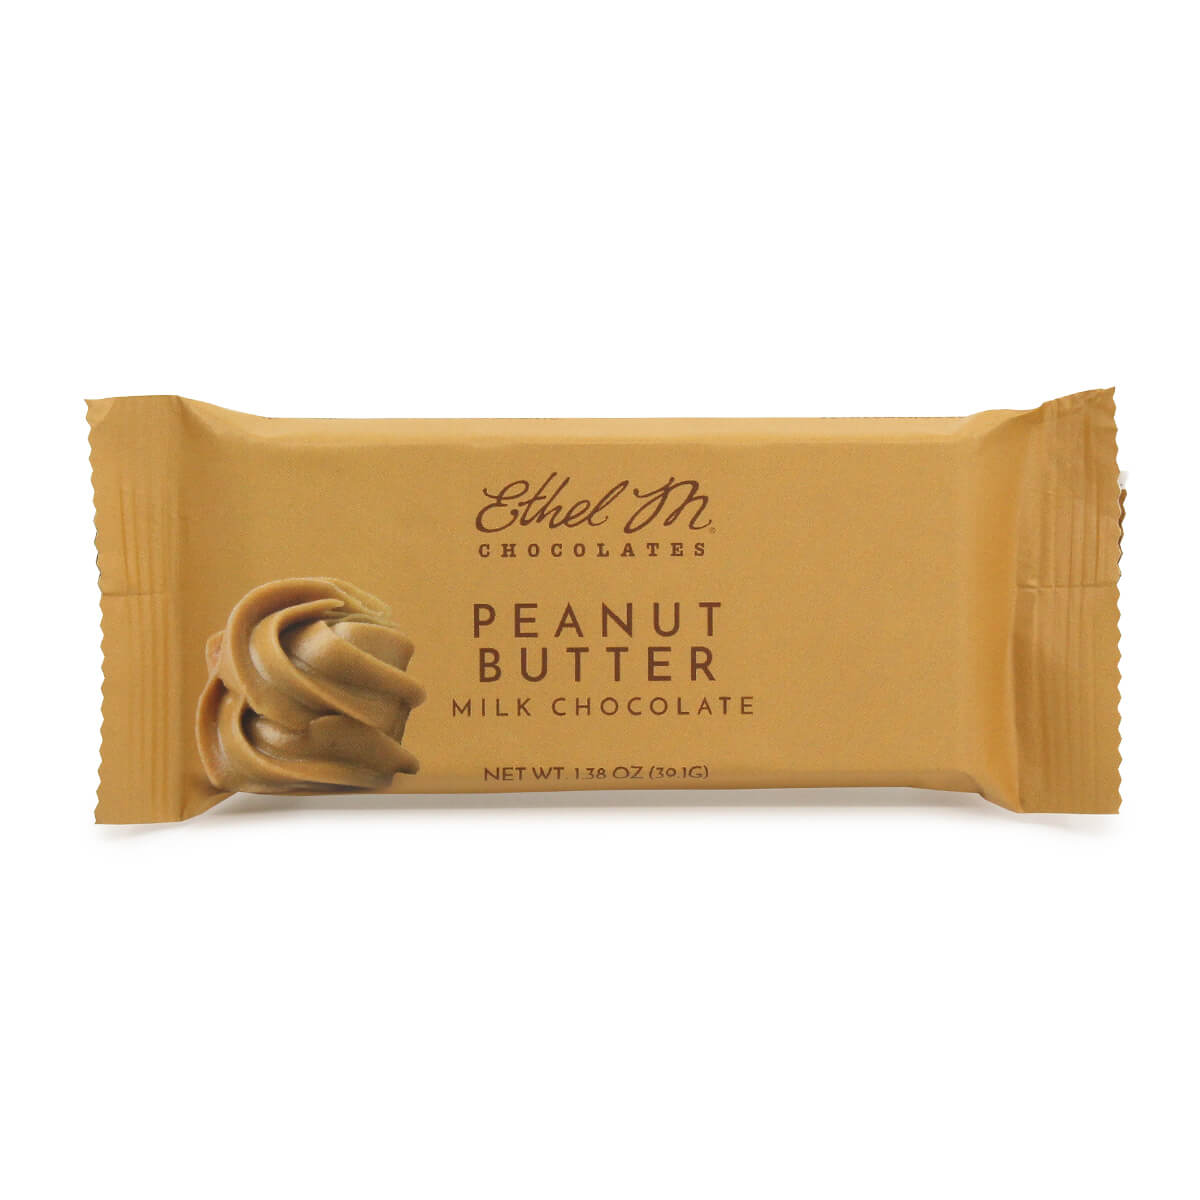 Premium Milk Chocolate Peanut Butter Gourmet Single Bars